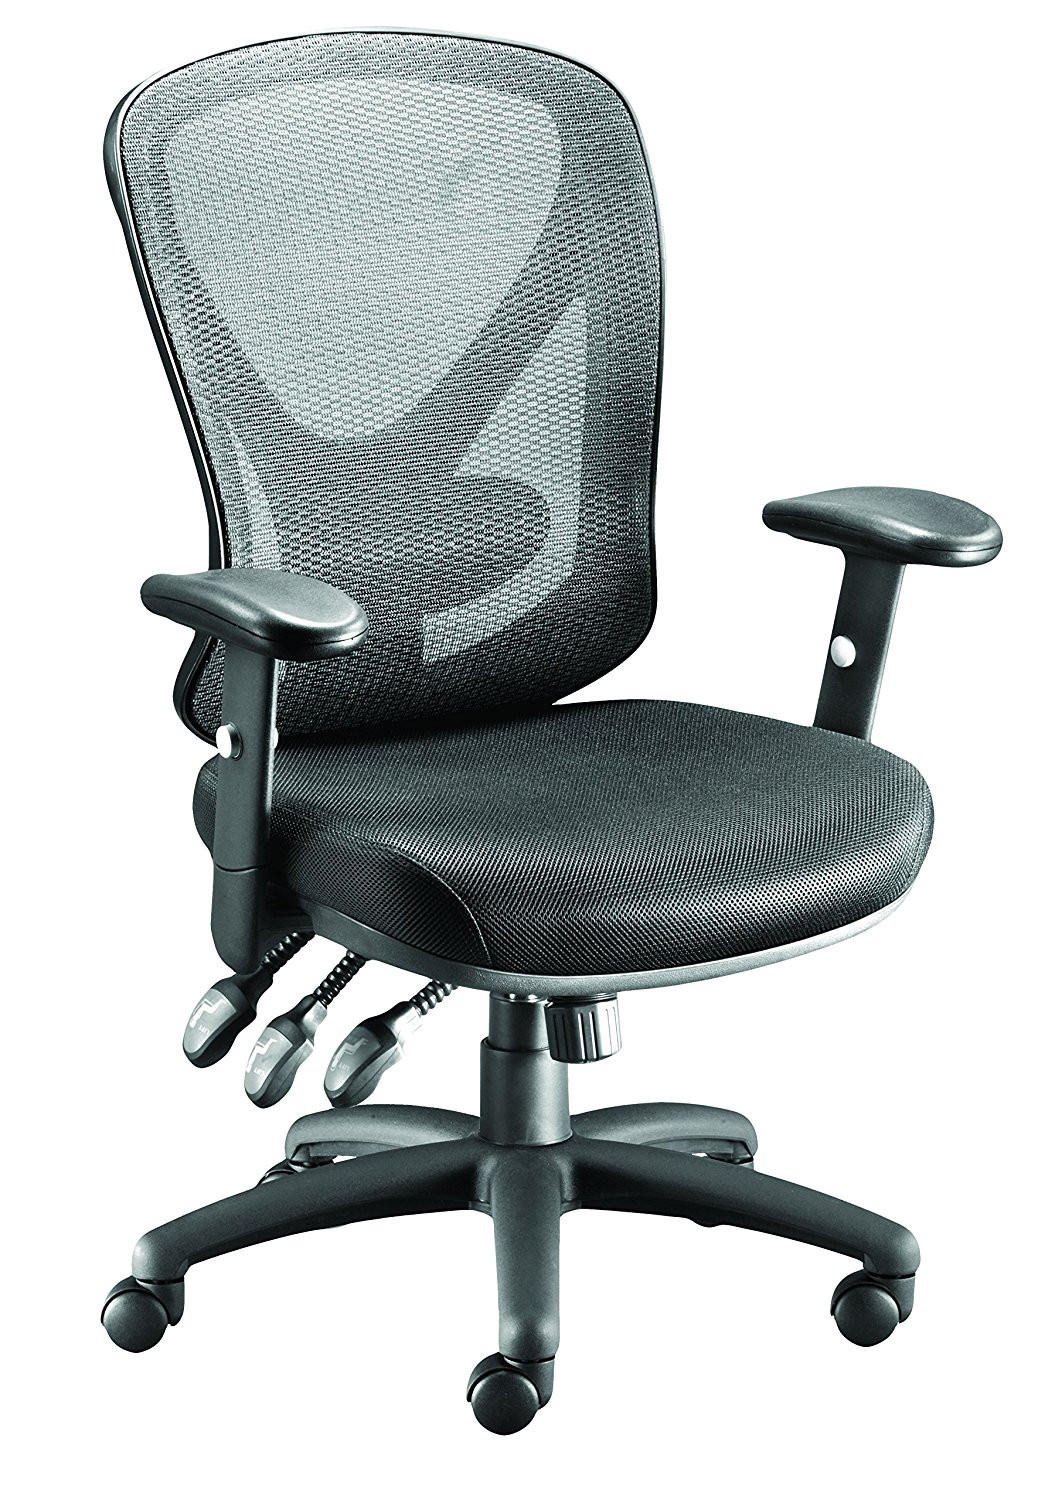 Best ideas about Ergonomic Chair Amazon
. Save or Pin Ikayaa Multifunction Adjustable Mesh Ergonomic fice Now.